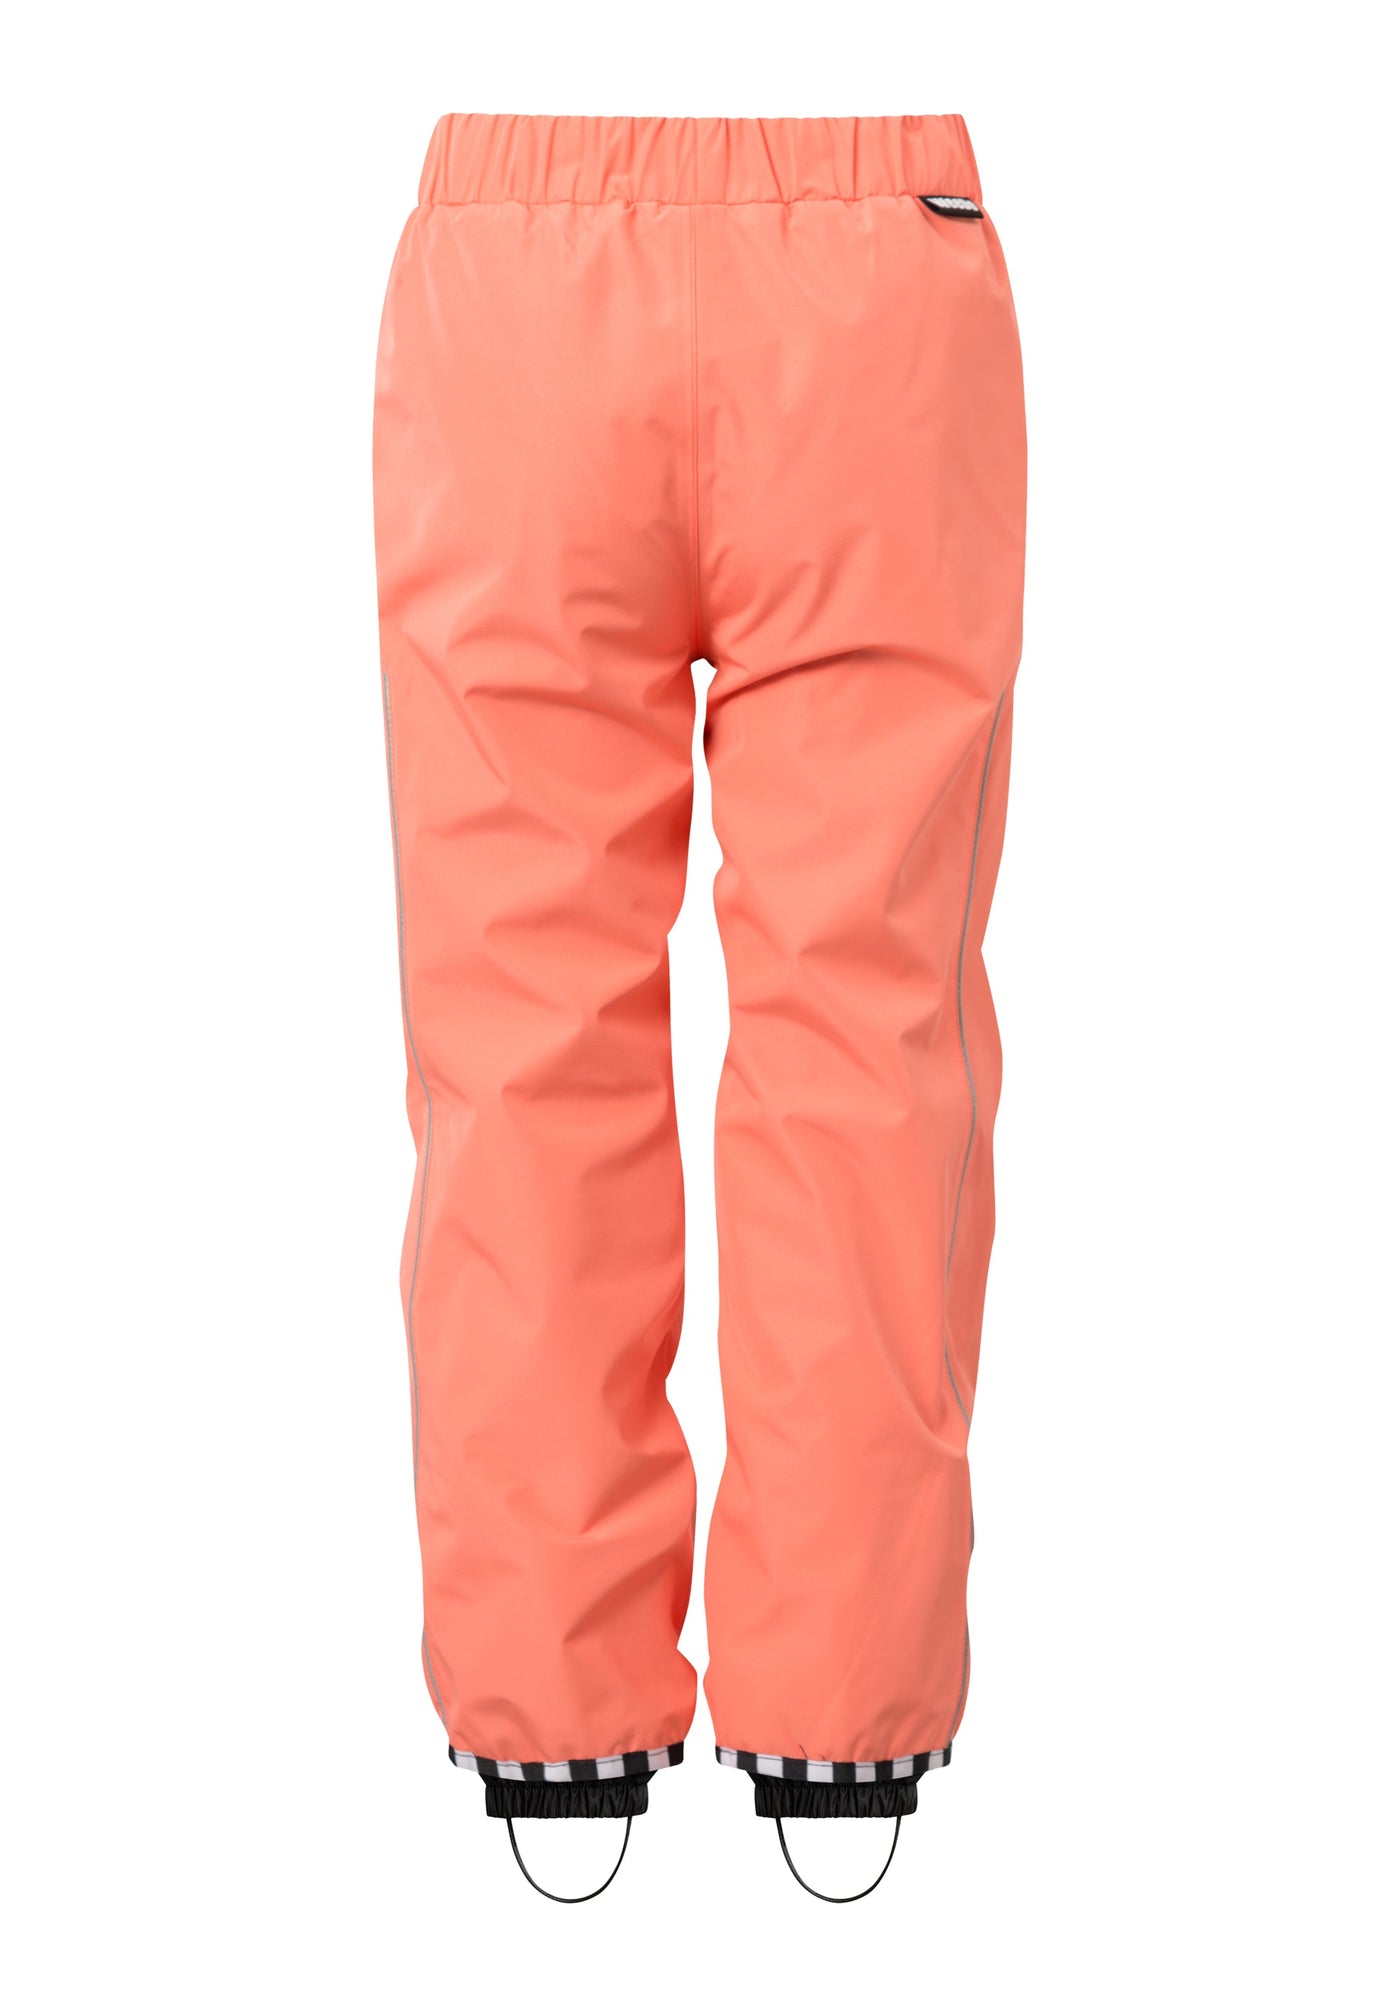 WeeDo Kids Rain Trouser Holly Peach/Pink - Last One Left - Size 140cm